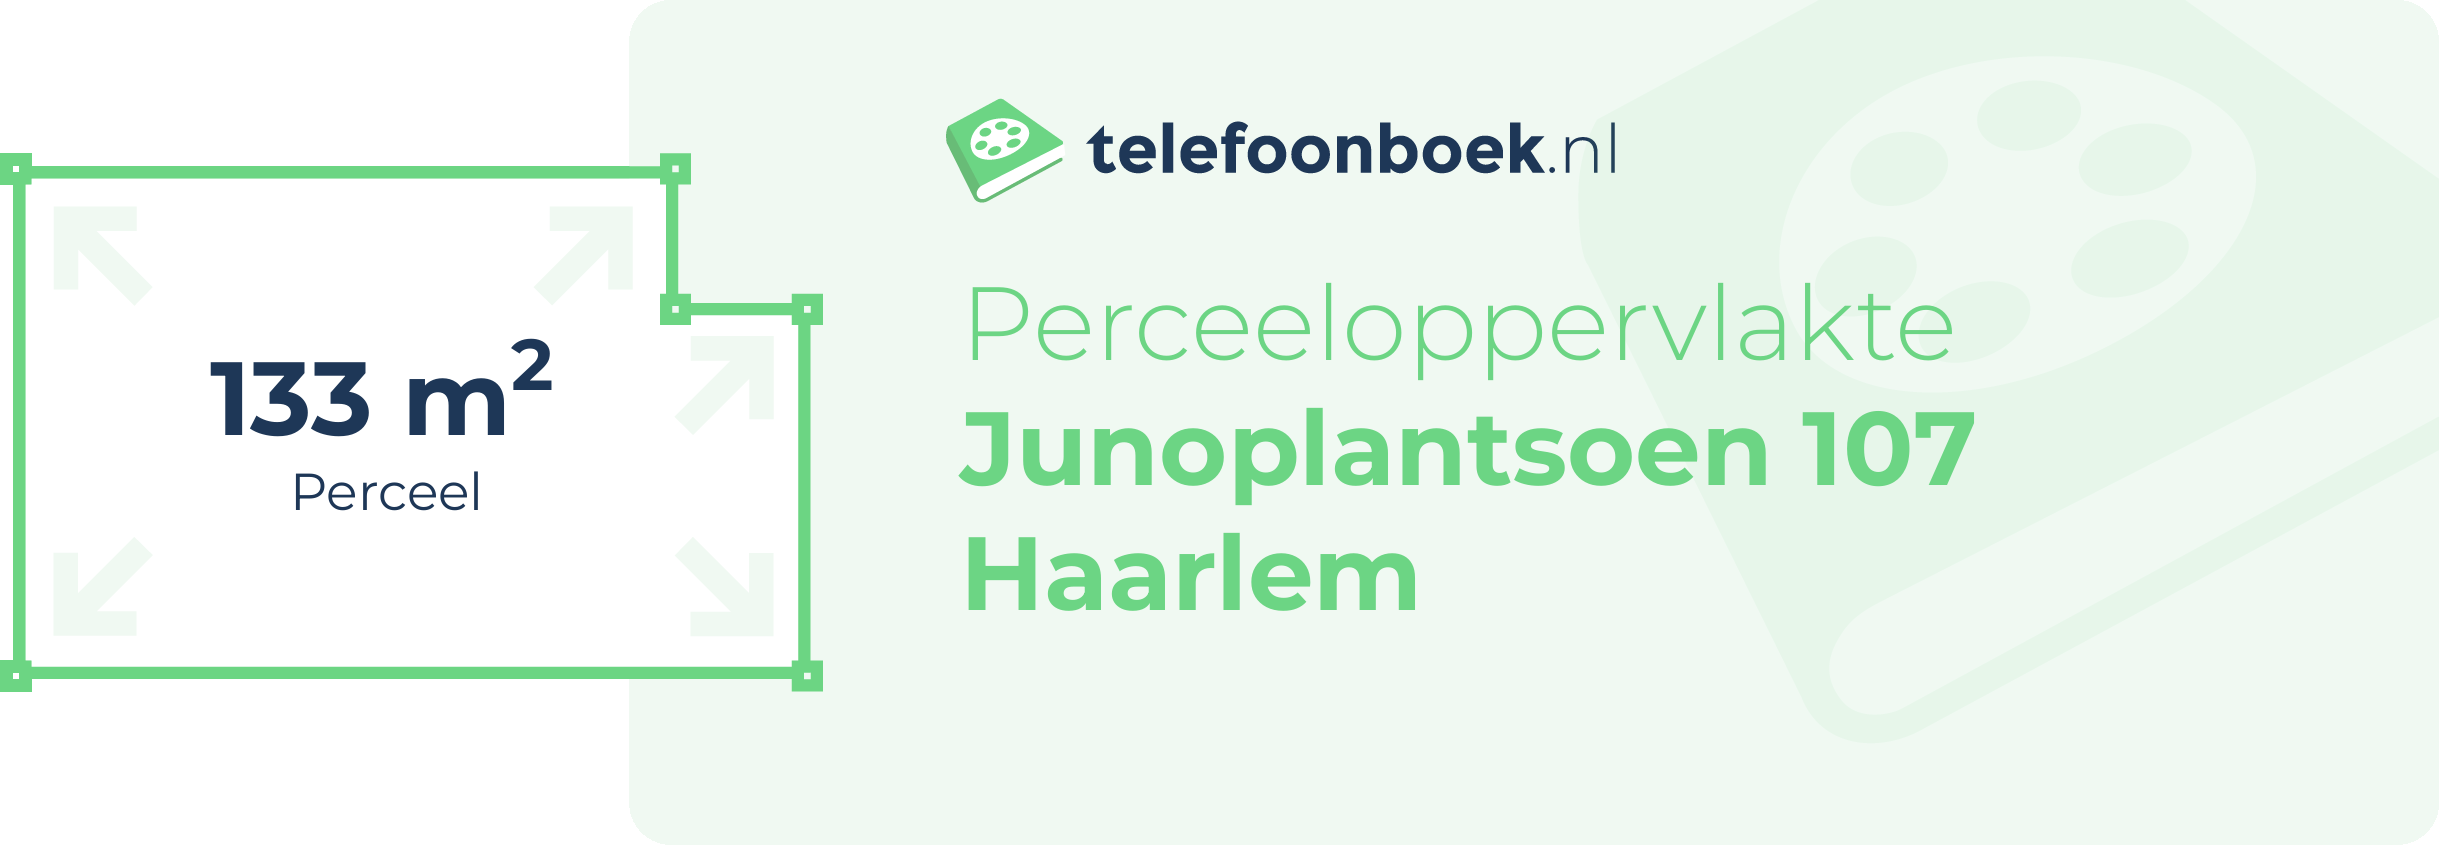 Perceeloppervlakte Junoplantsoen 107 Haarlem